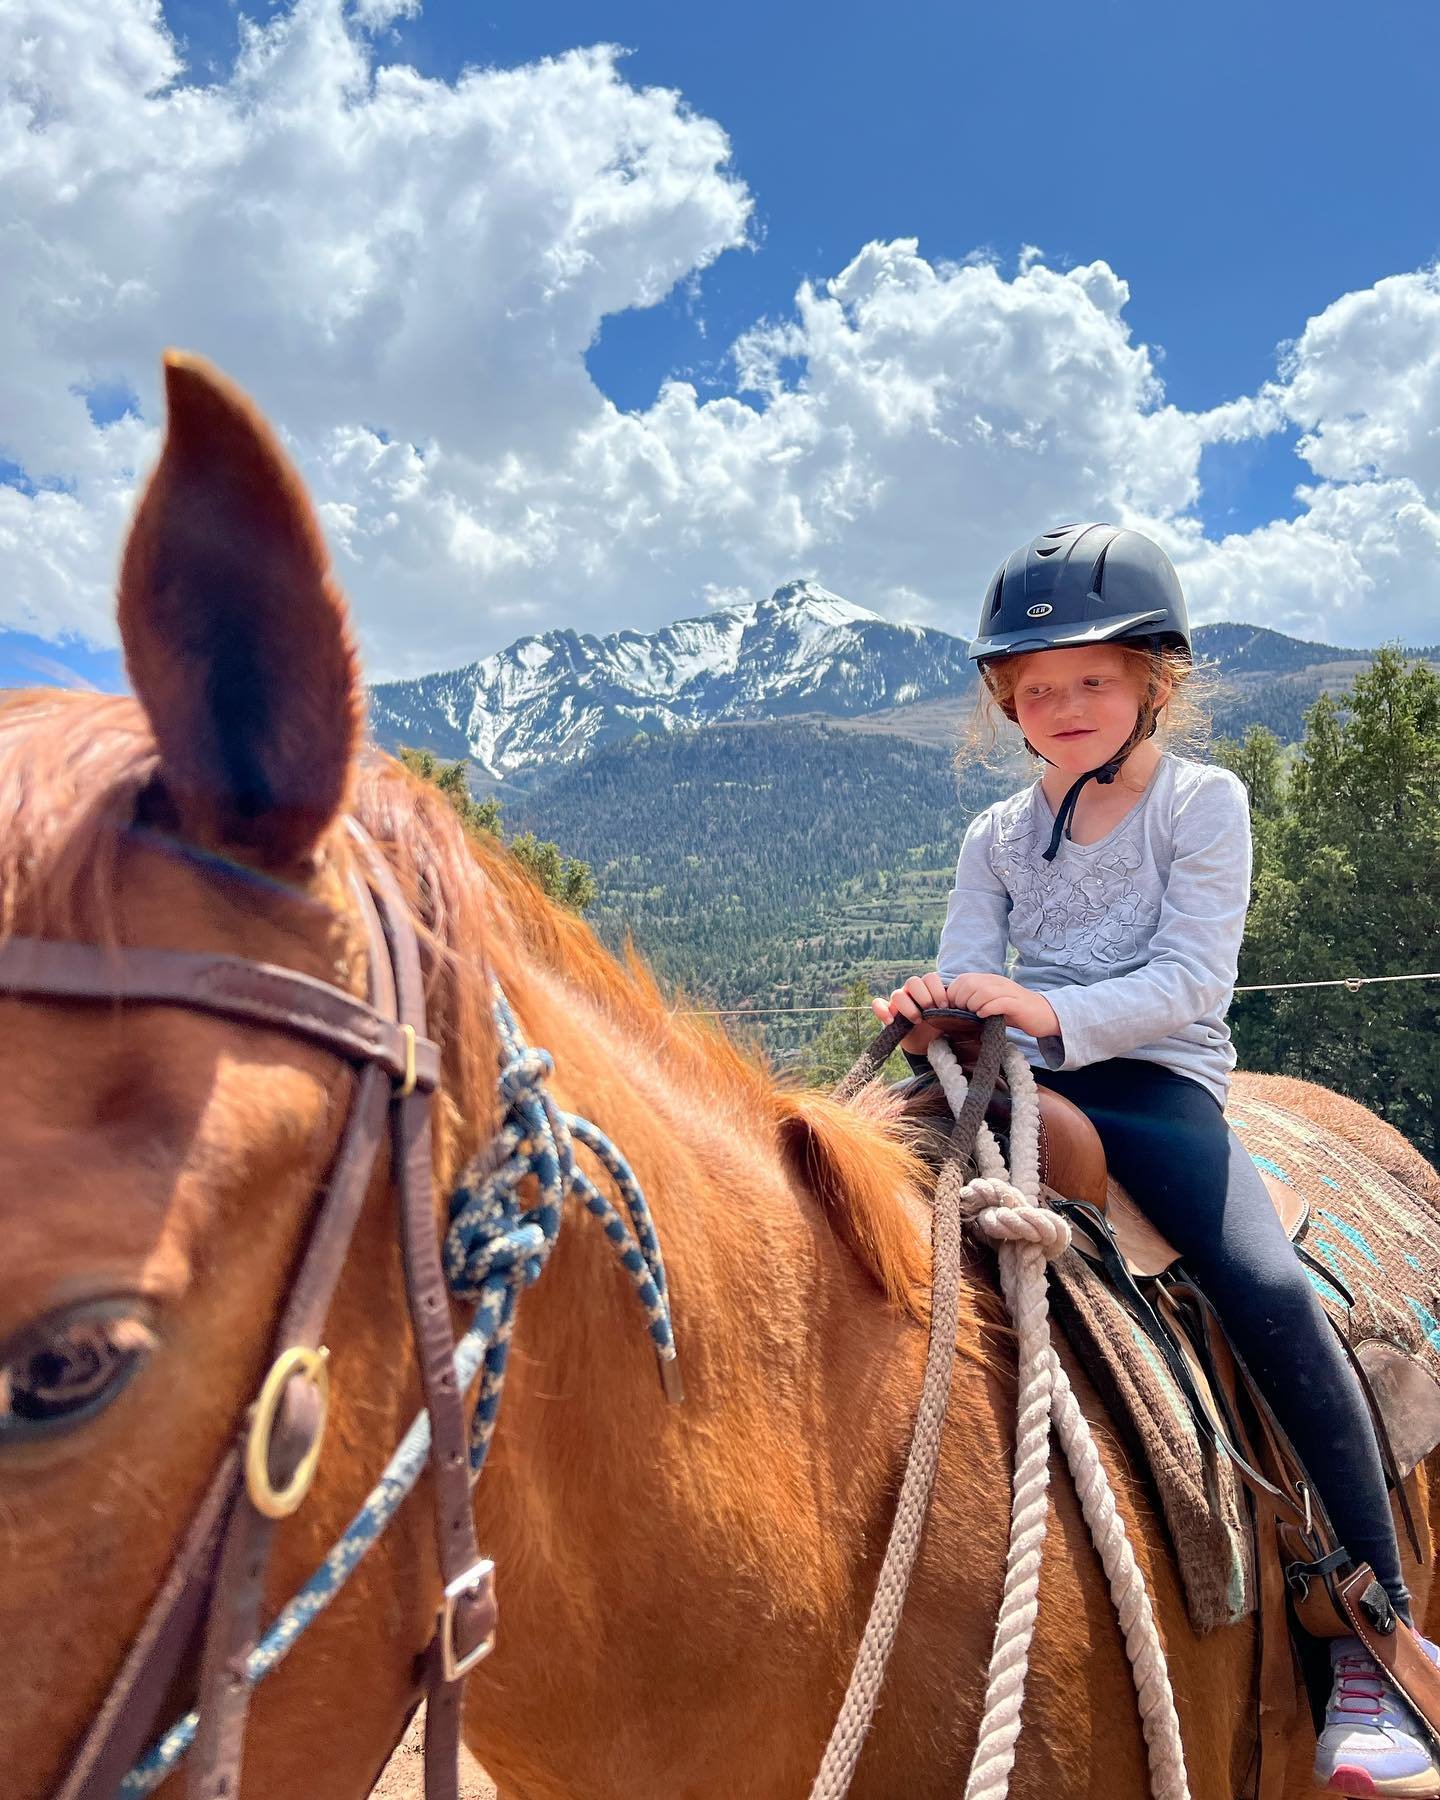 Little girl on a horse